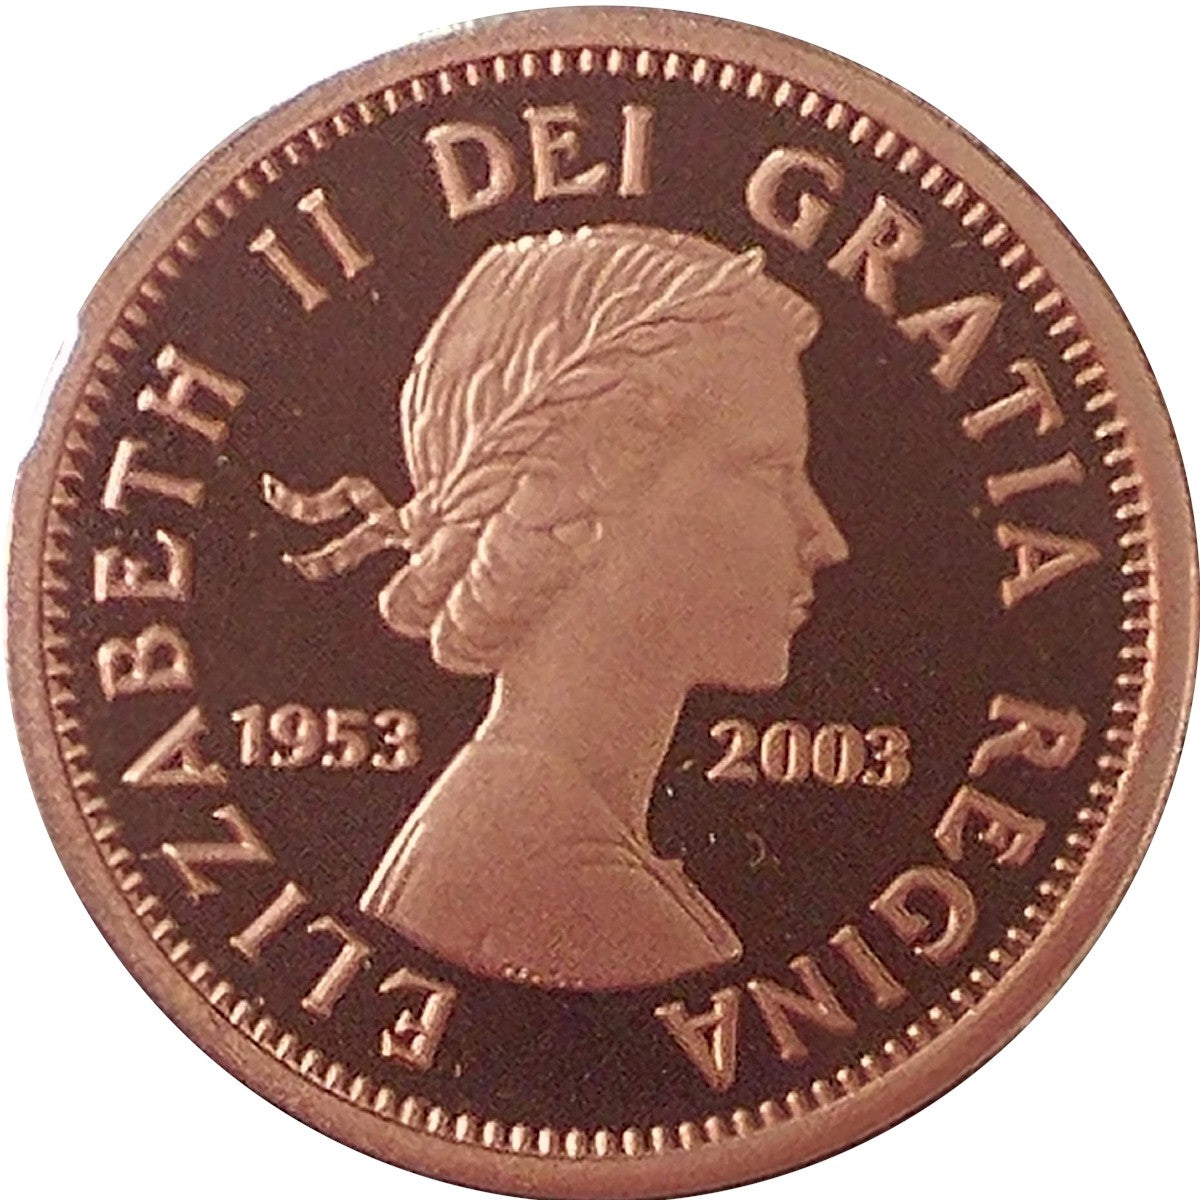 2003 Coronation (1953-2003) Canada 1-cent Proof